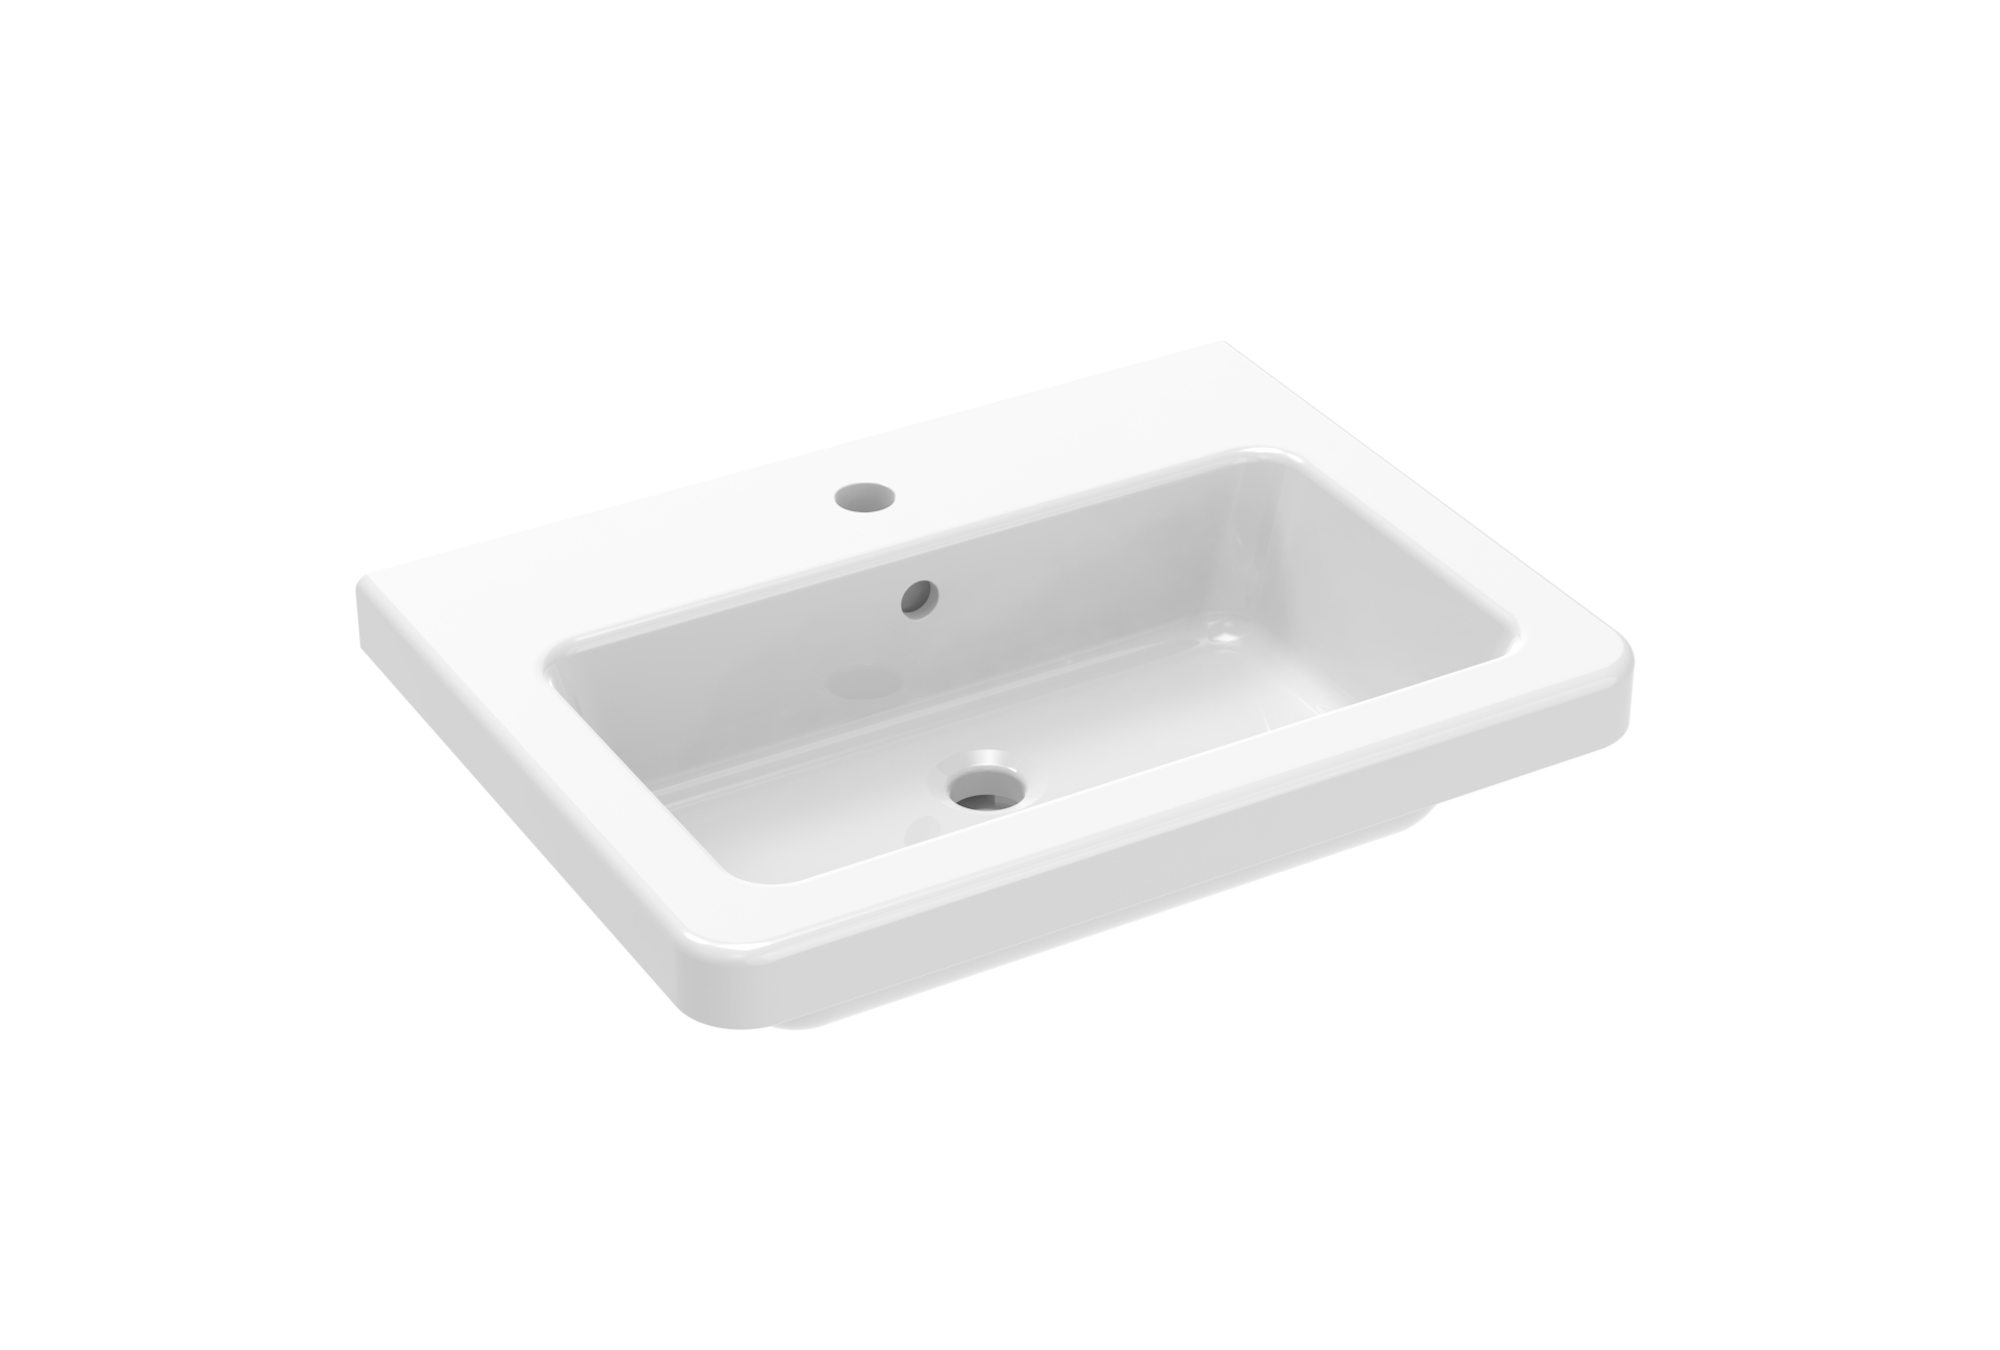 INDIGO 60x45cm washbasin 1TH - European / Alpine White